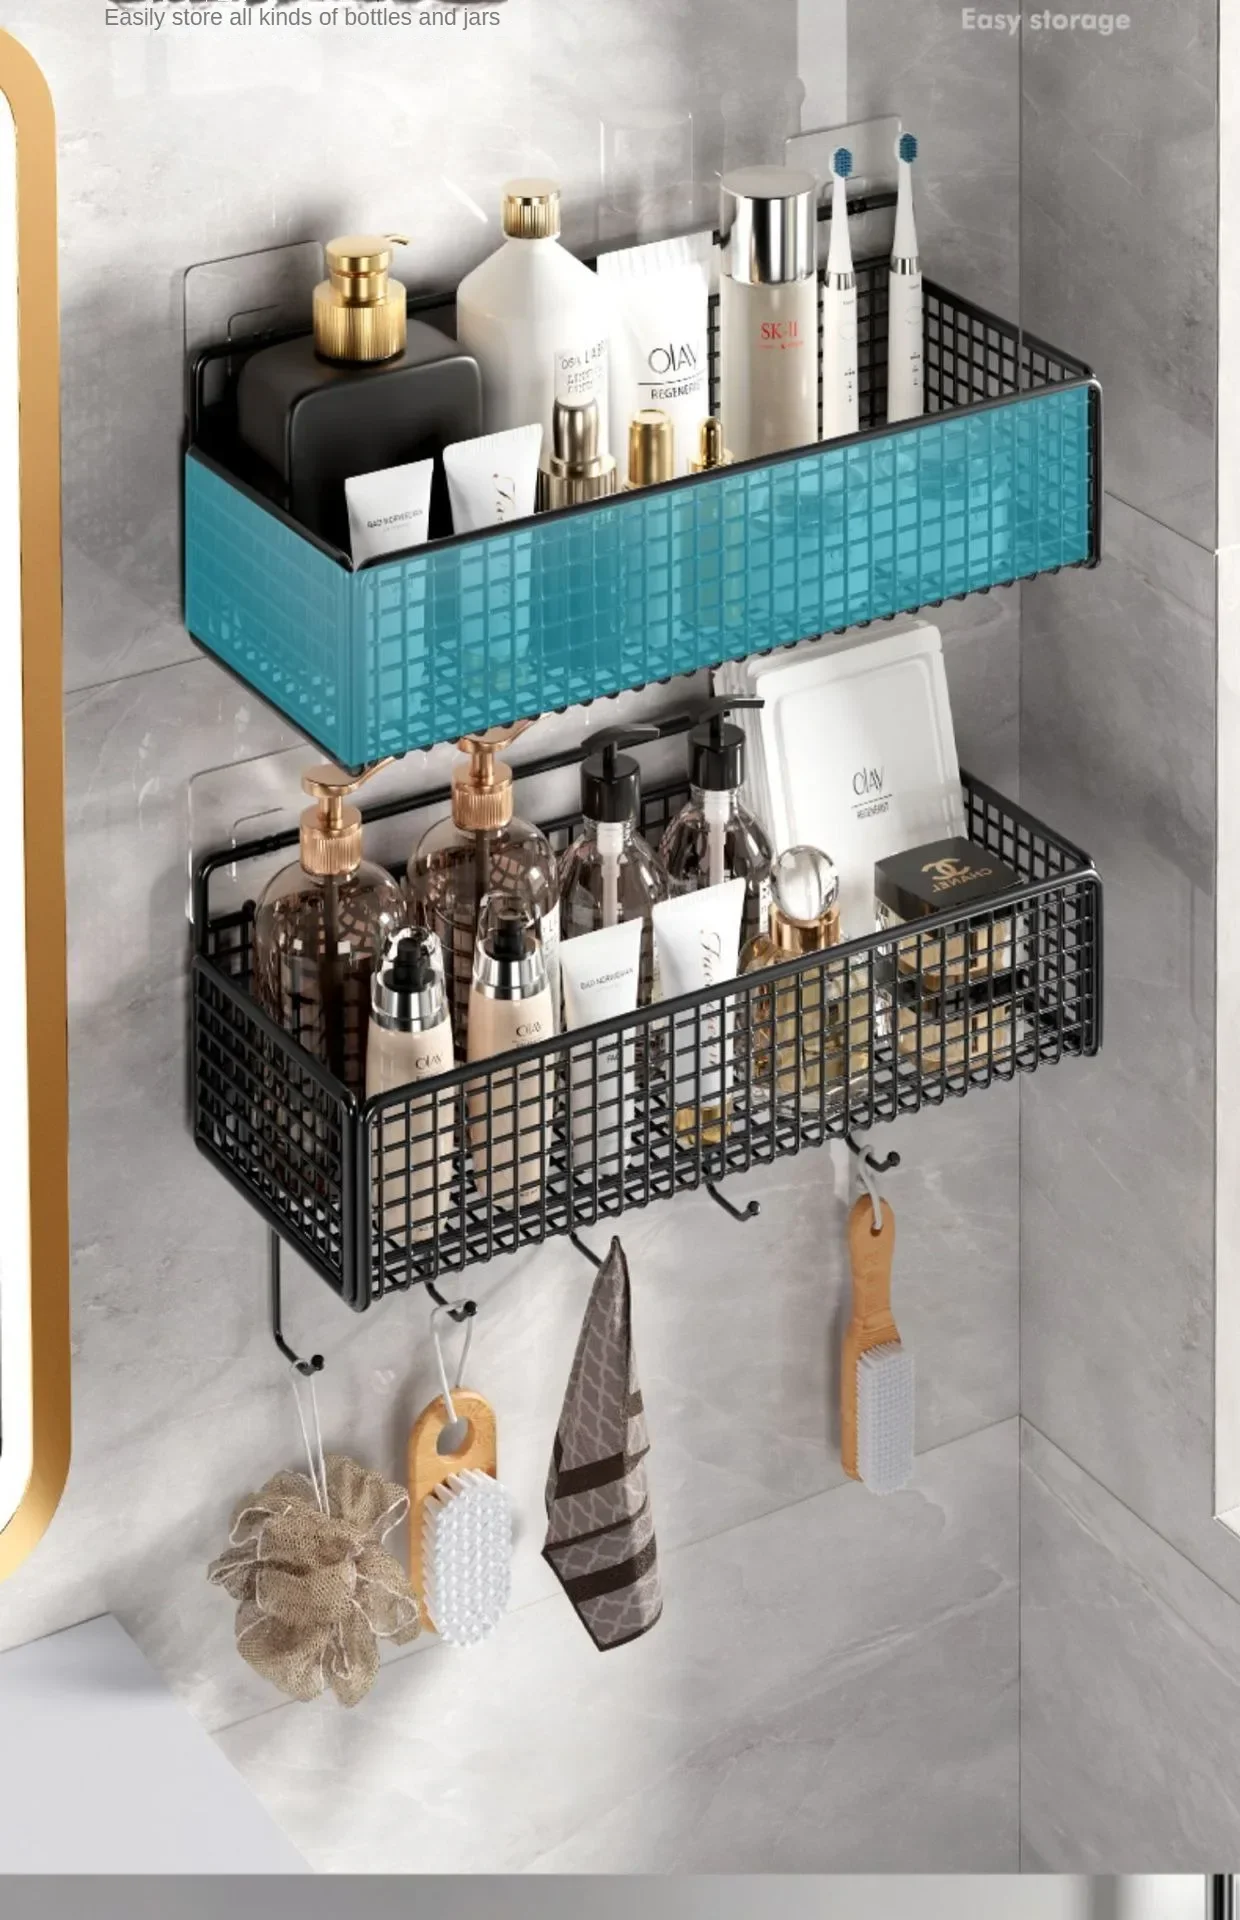 S24598540921a455782ca6a0c4f36bb69c Bilayer Bathroom Grid Shelf Suspension Type Bathroom Organizer Shampoo Shower Gel Kitchen Makeup Storage Bathroom Accessories